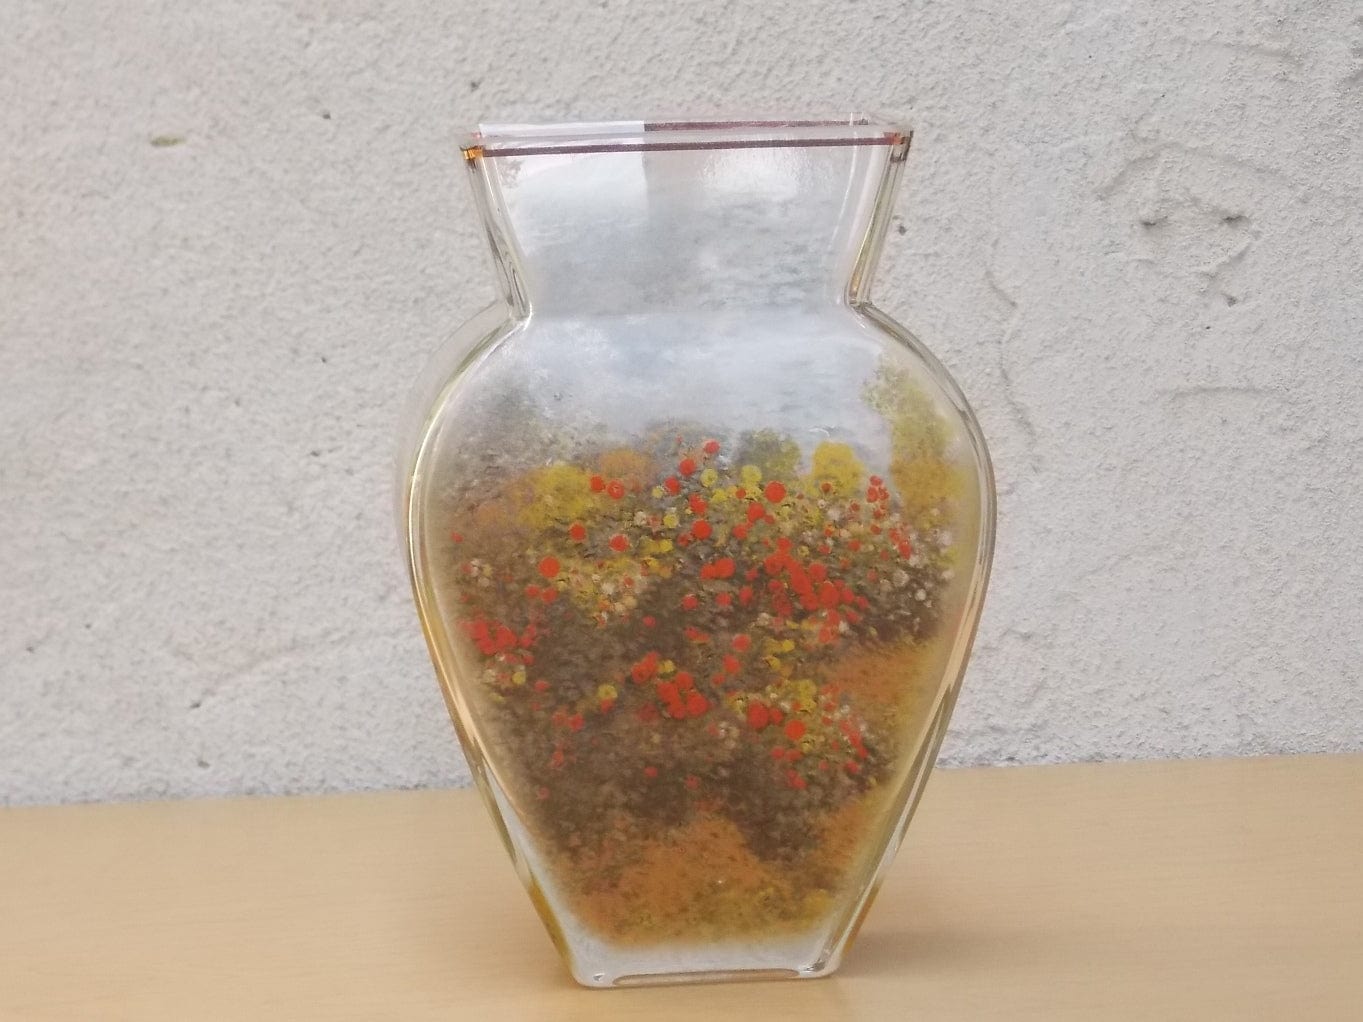 I Like Mike's Mid Century Modern Wall Decor & Art Goebel Glass Claude Monet Vase, La maison de l'artiste